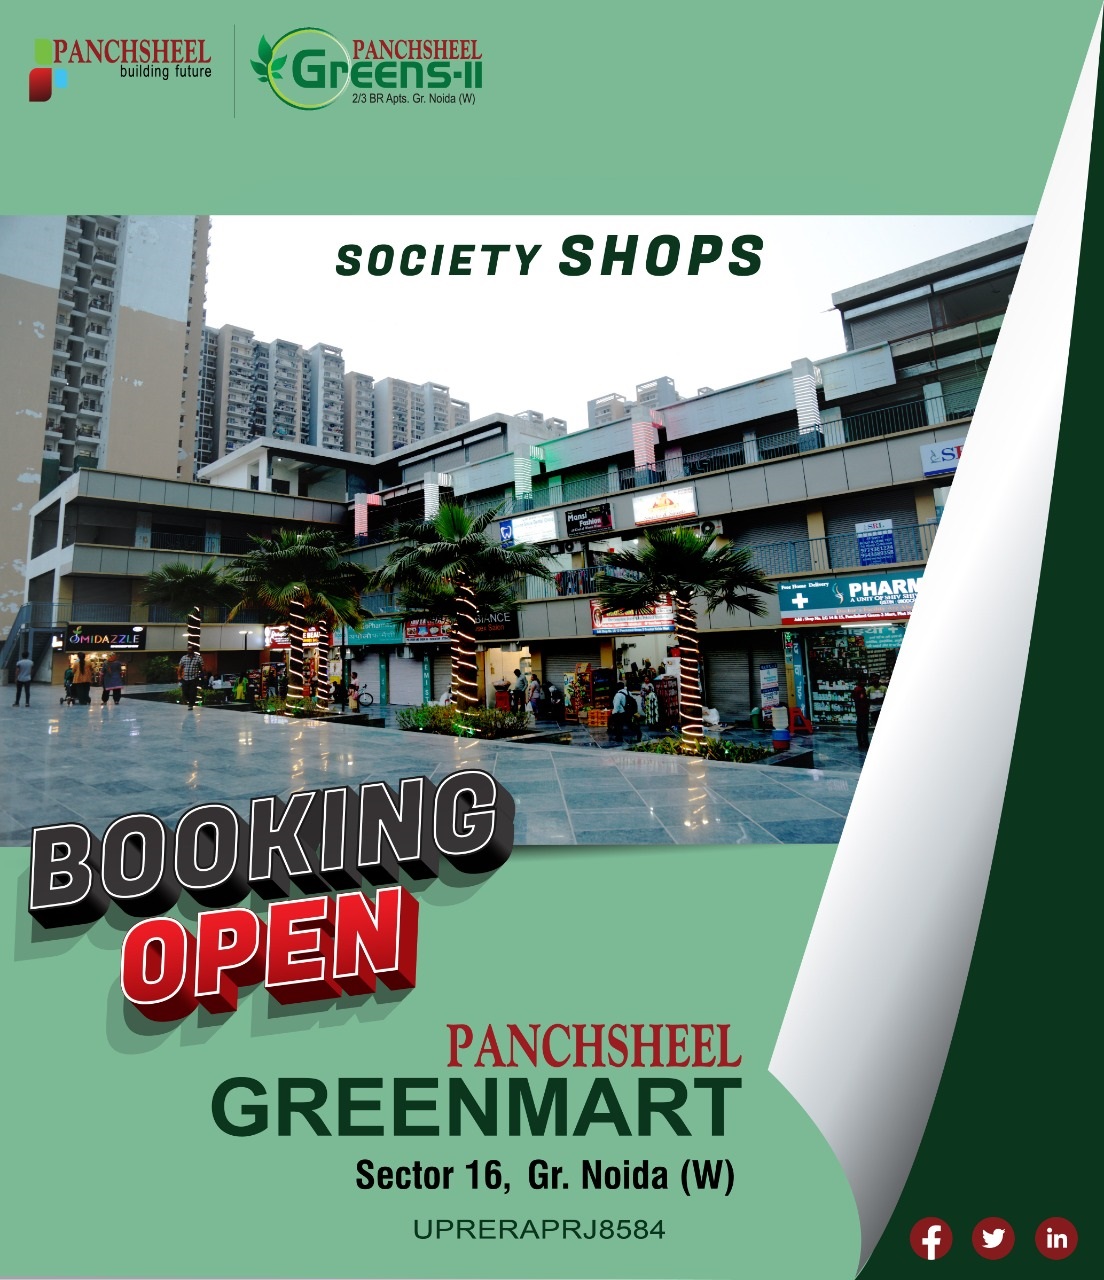 Booking open at Panchsheel Greensmart in Greater Noida